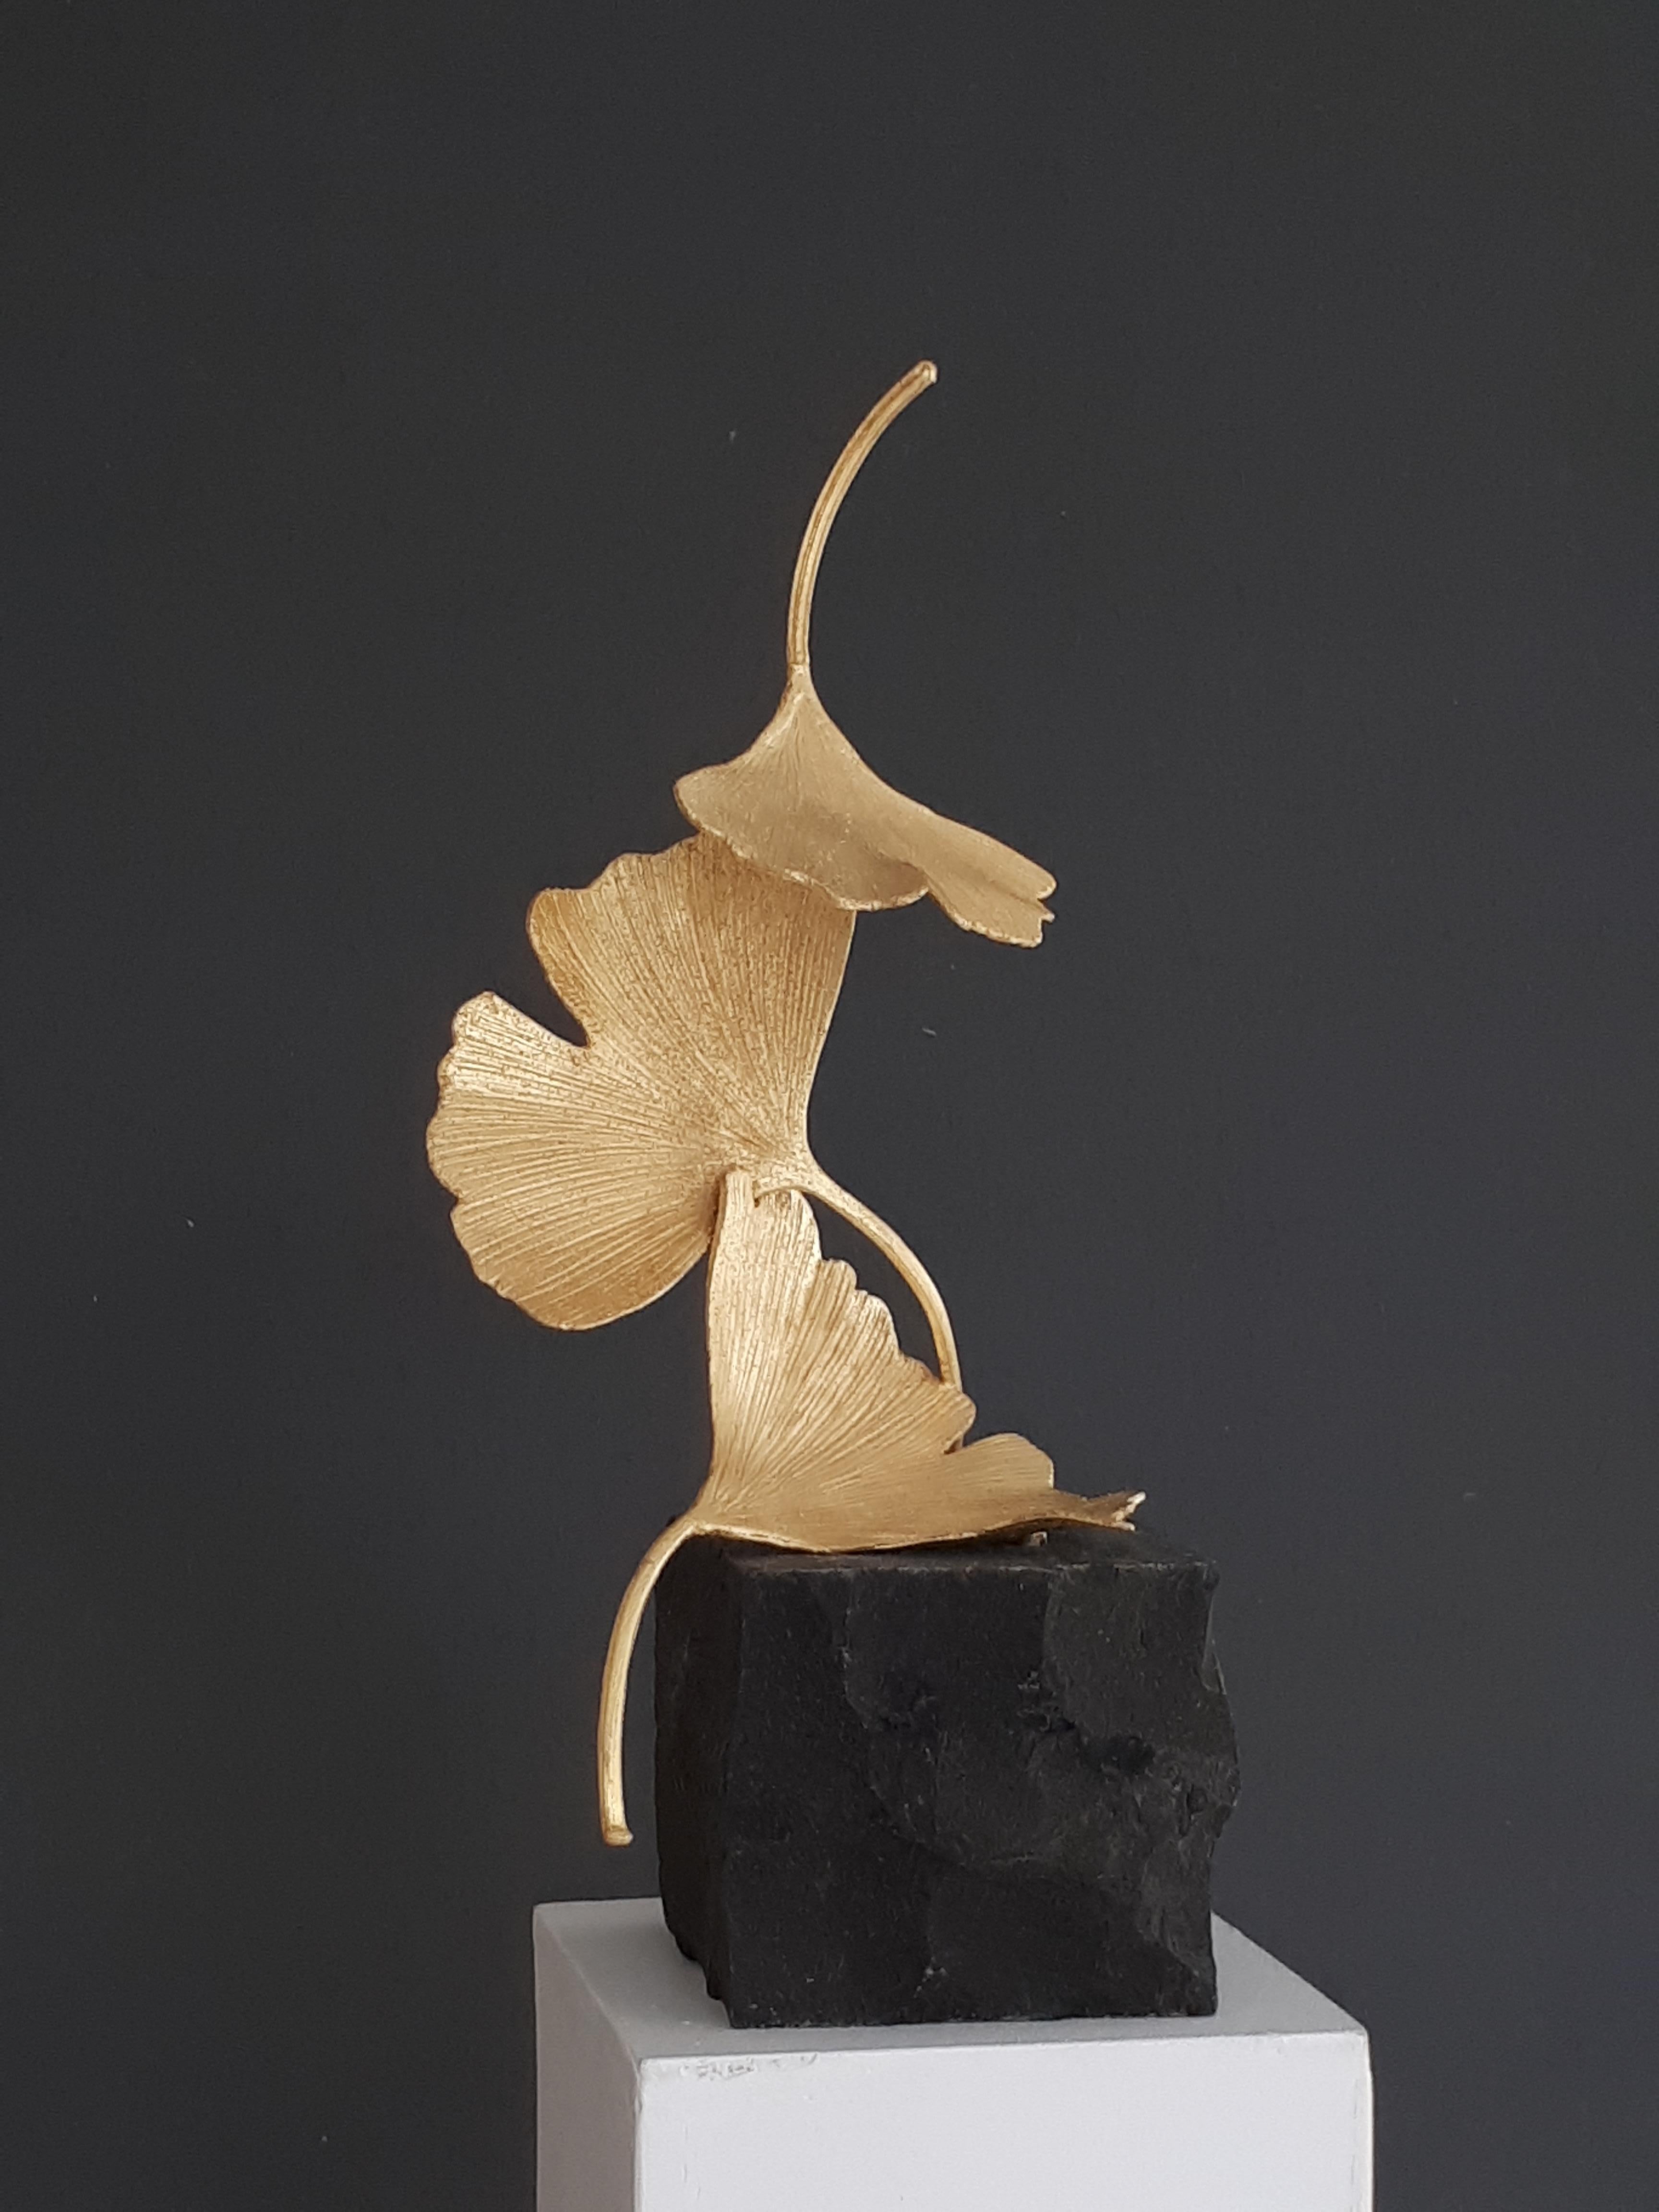 Artist: Kuno Vollet

Title: Golden Gingko

Materials: Cast brass, gold leaf, black granite base

Size: 25 x 9 x 9 cm

_______________________________________________________________________

This small elegant original bronze cast sculpture by